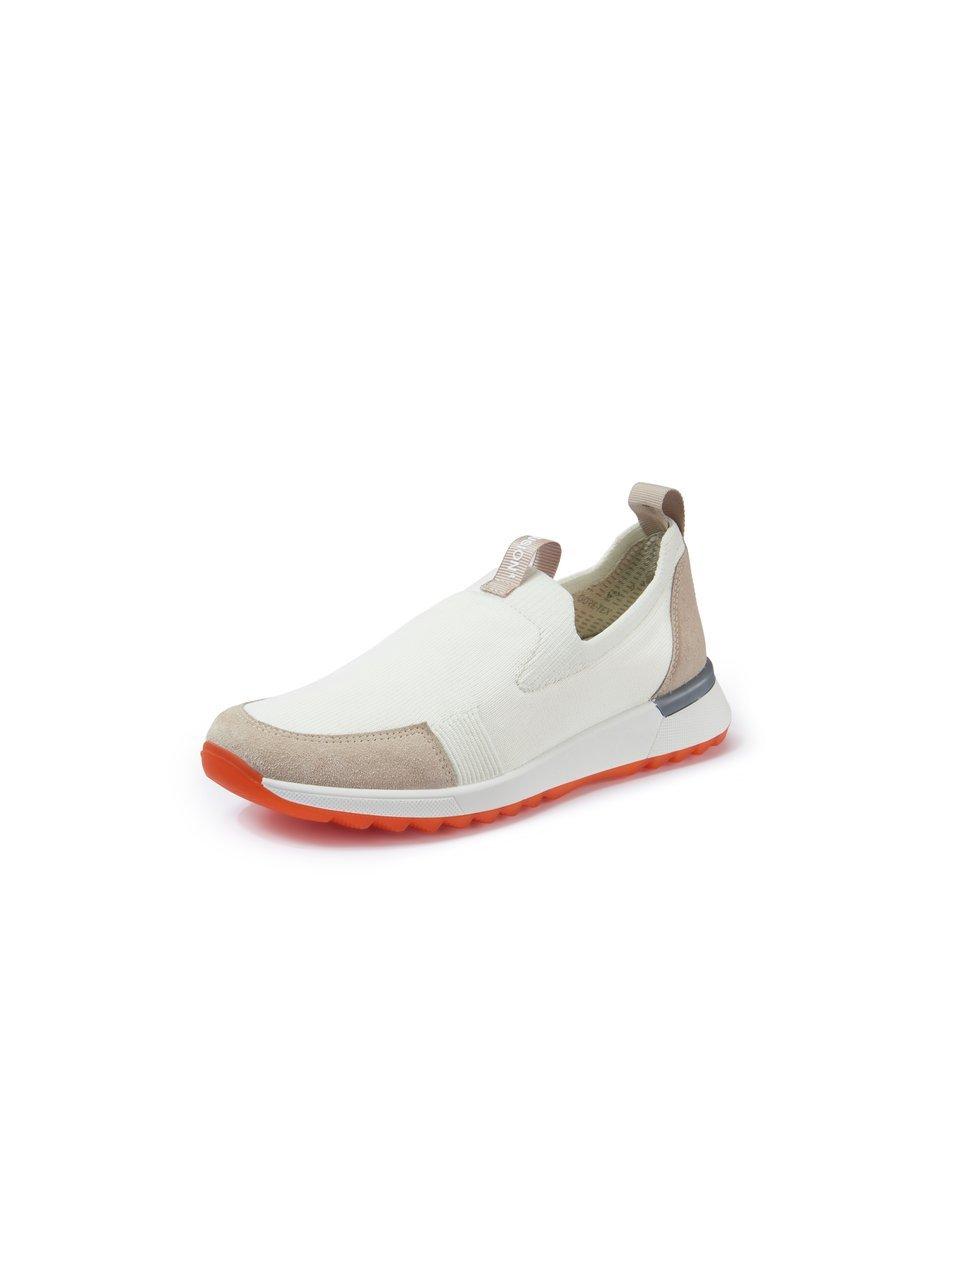 https://media.peterhahn.com/i/peterhahn/302747_PACK_SL/ara-schlupf-sneaker-venice-sport-highsoft-offwhite-beige?$productdetail$